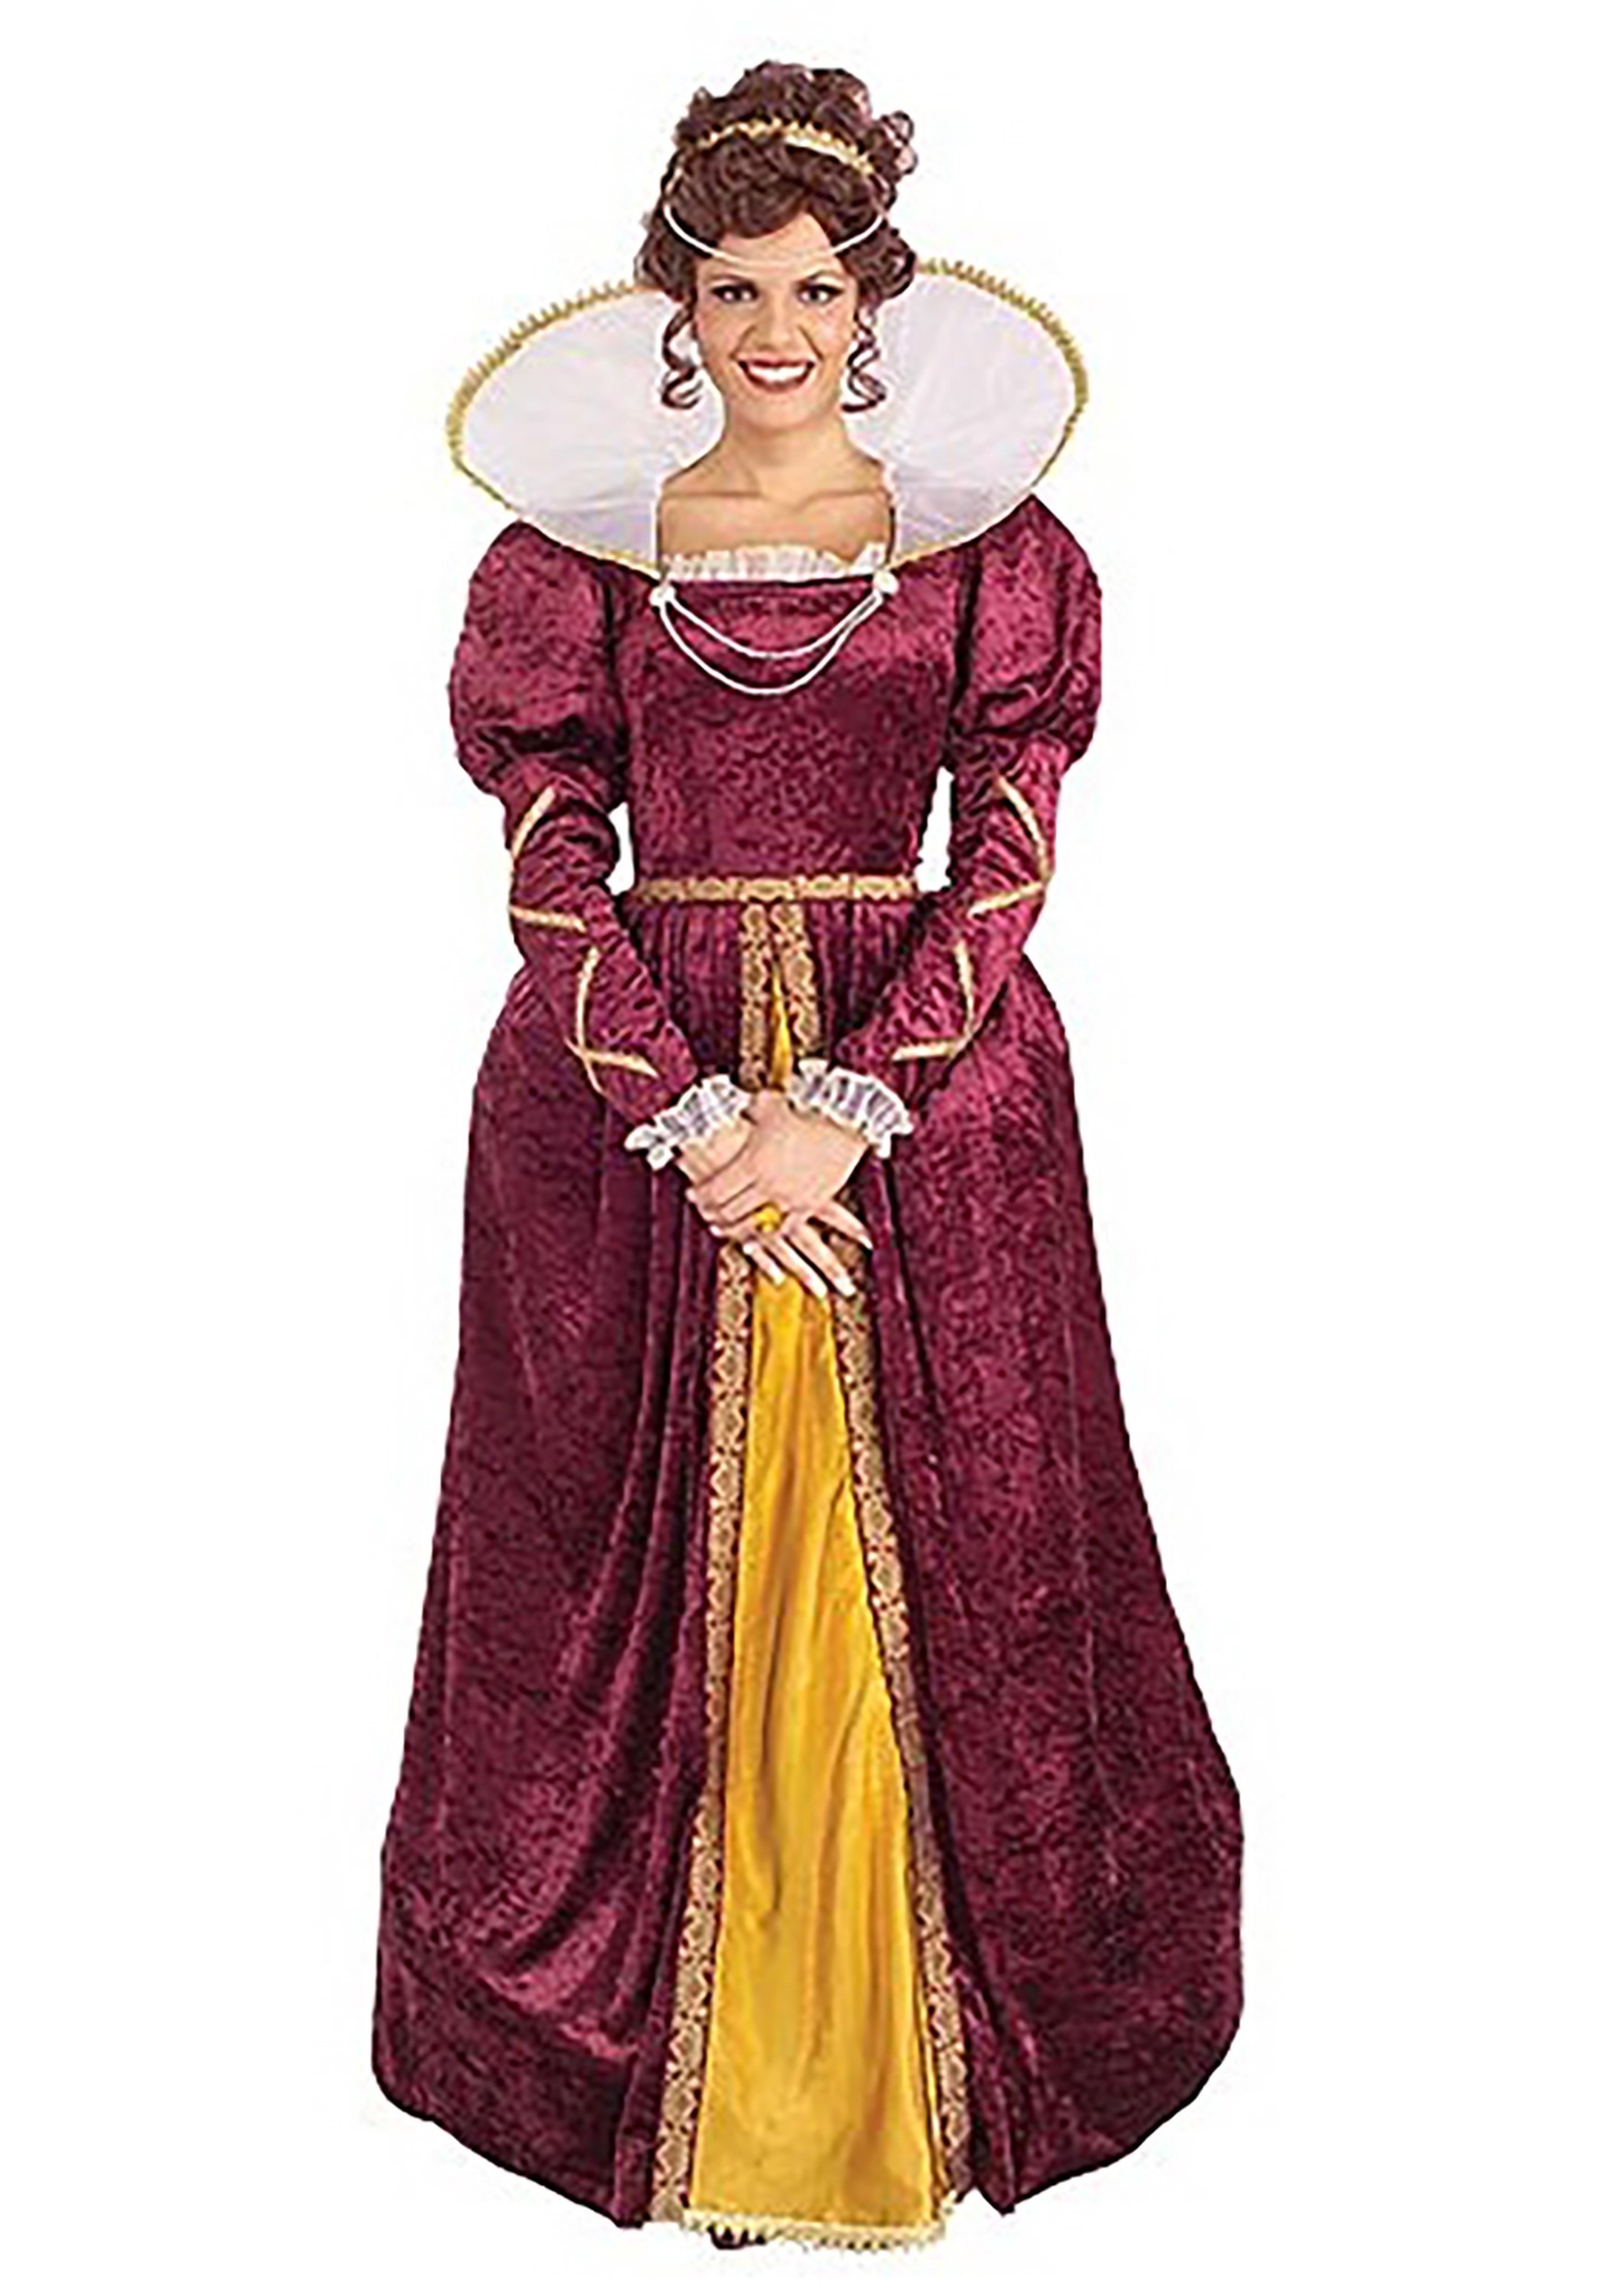 Women’s Elizabethan Costume